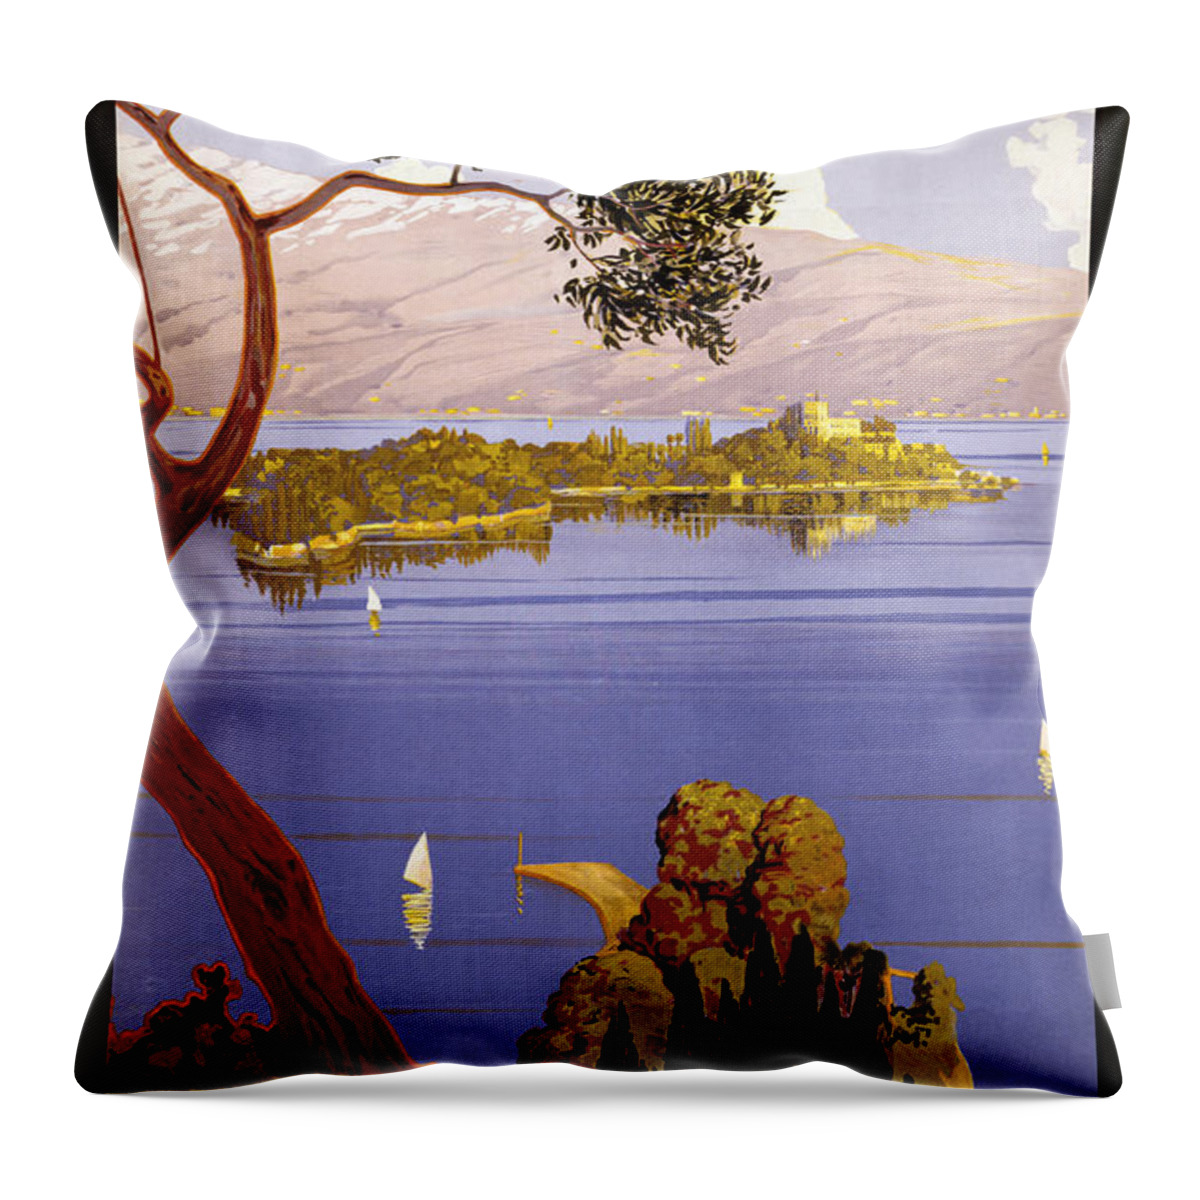 Beautiful Throw Pillow featuring the digital art Lake Garda by Georgia Clare